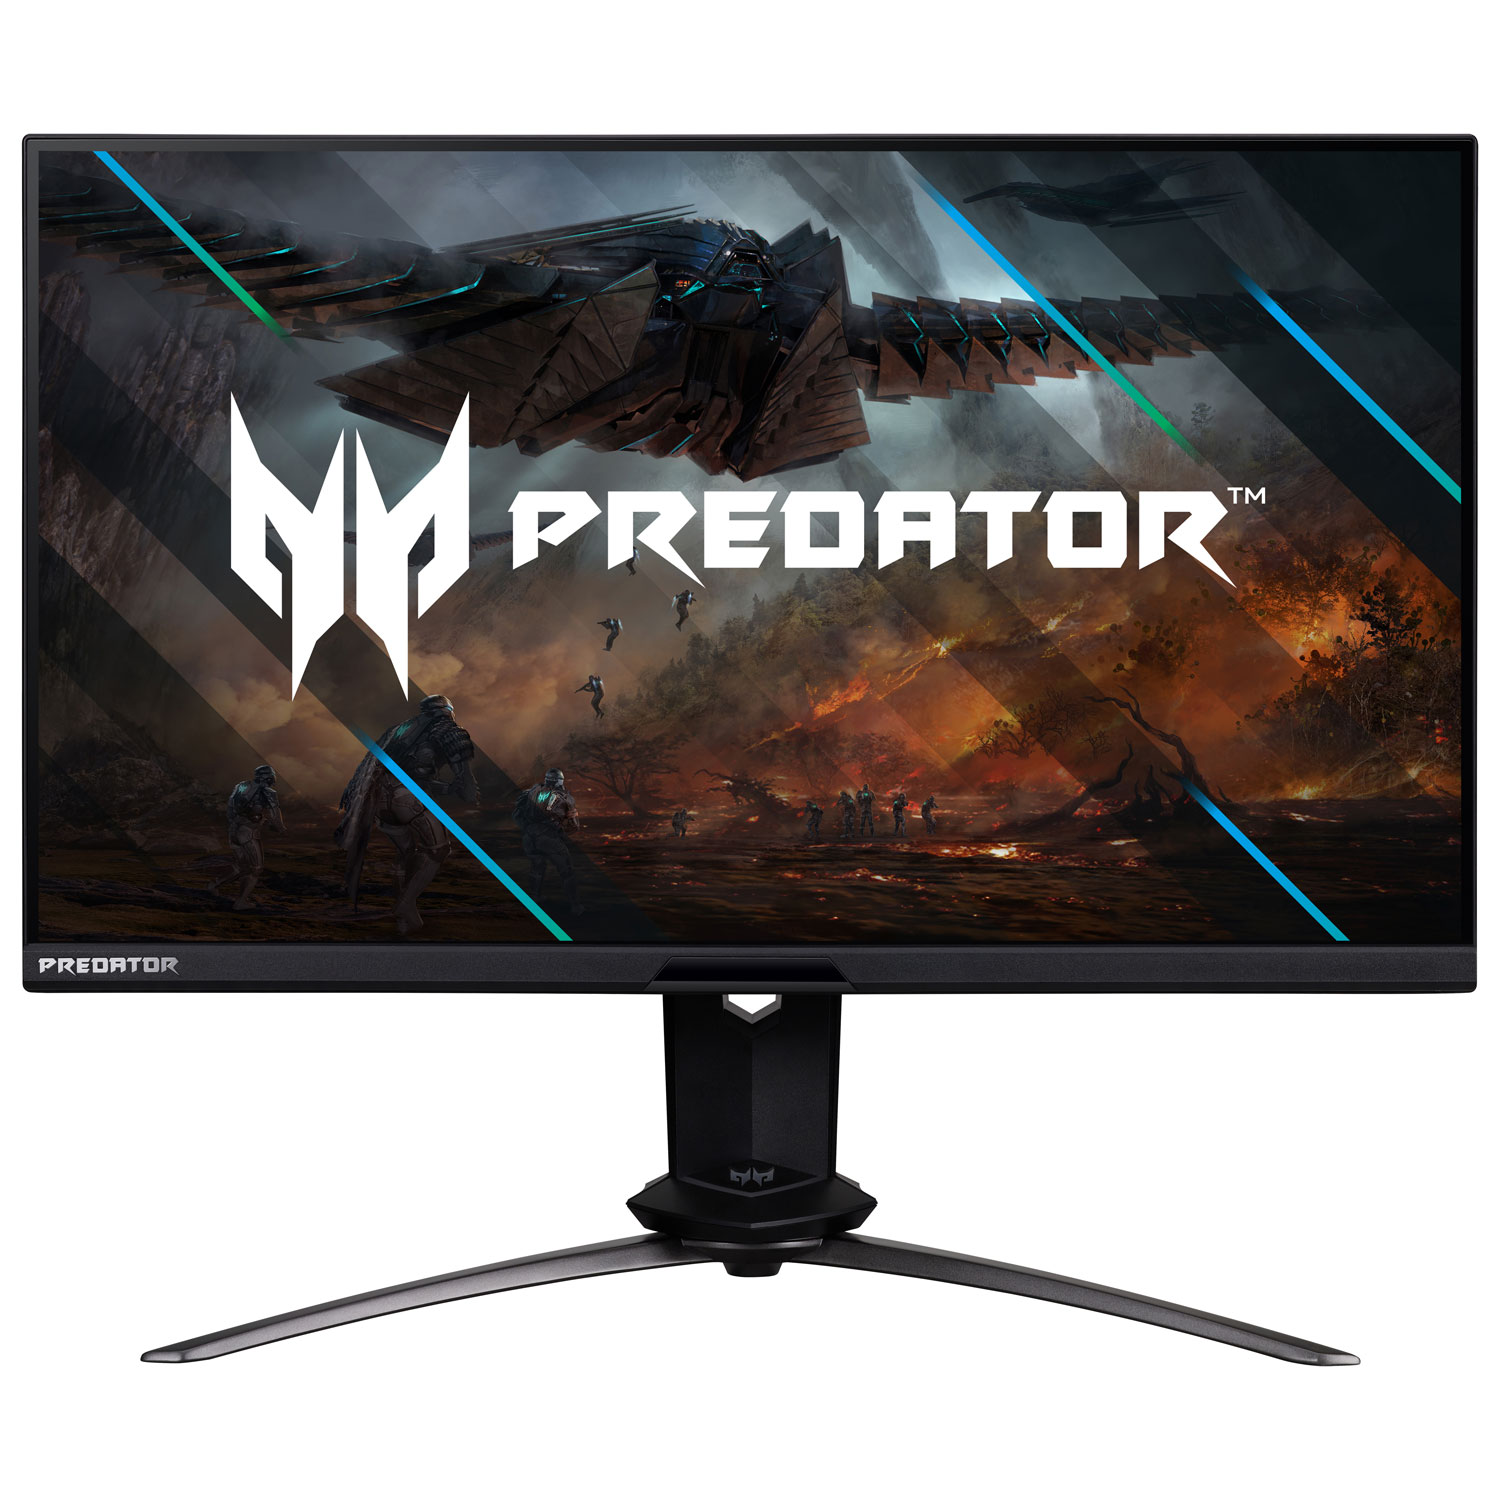 Acer Predator X25 24.5" FHD 360Hz 1ms GTG IPS LED G-Sync Gaming Monitor (X25 bmiiprzx) - Black